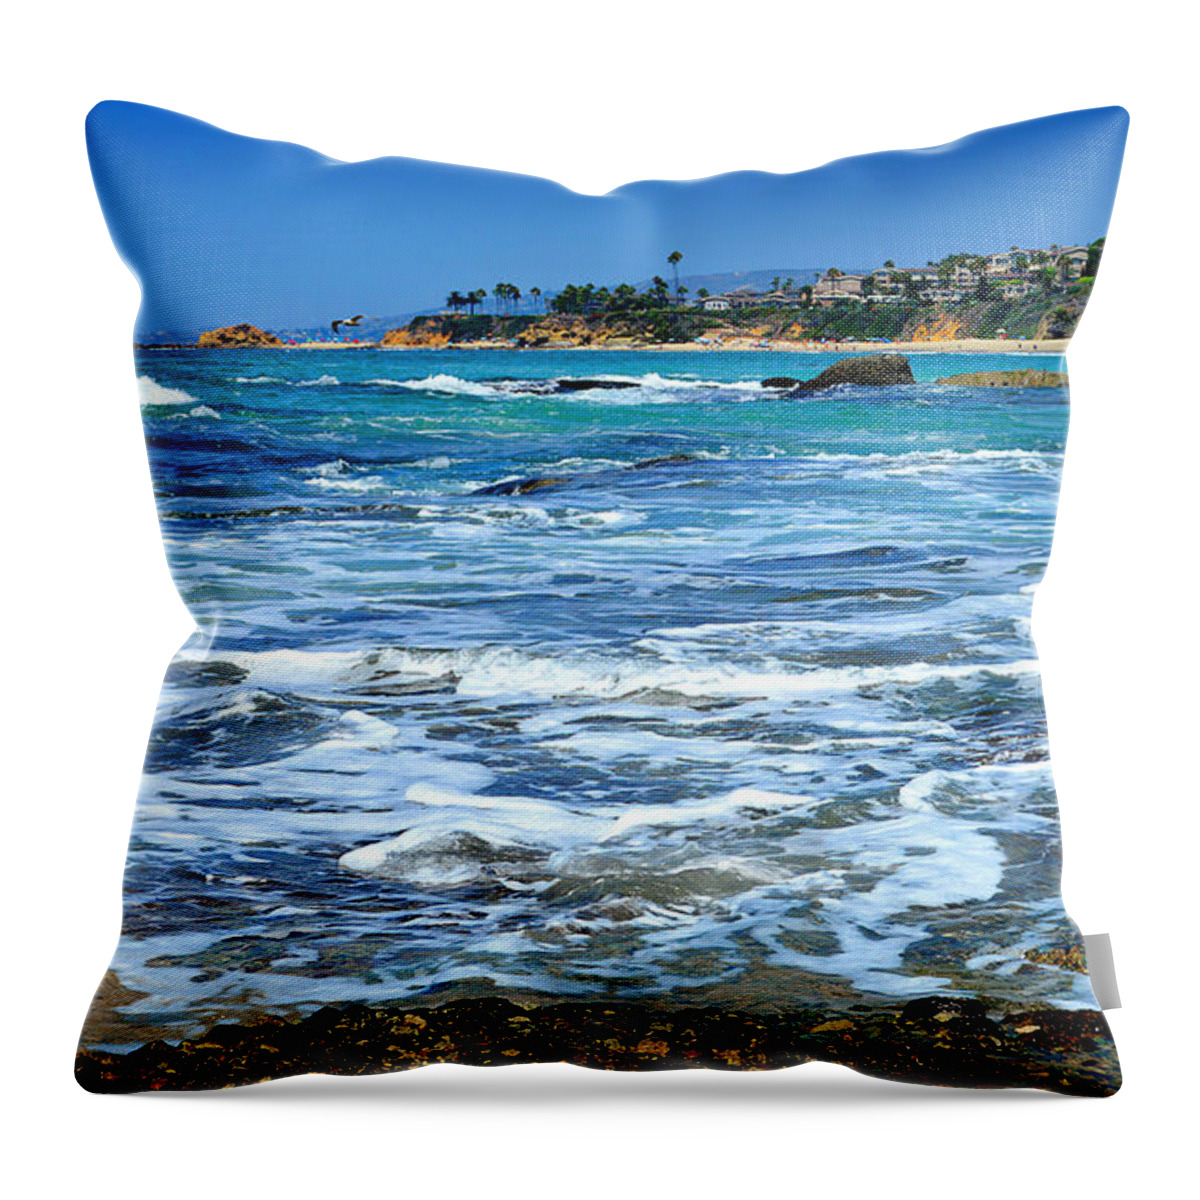 Laguna Beach Throw Pillow featuring the photograph Aliso Point - Laguna Beach by Glenn McCarthy Art and Photography